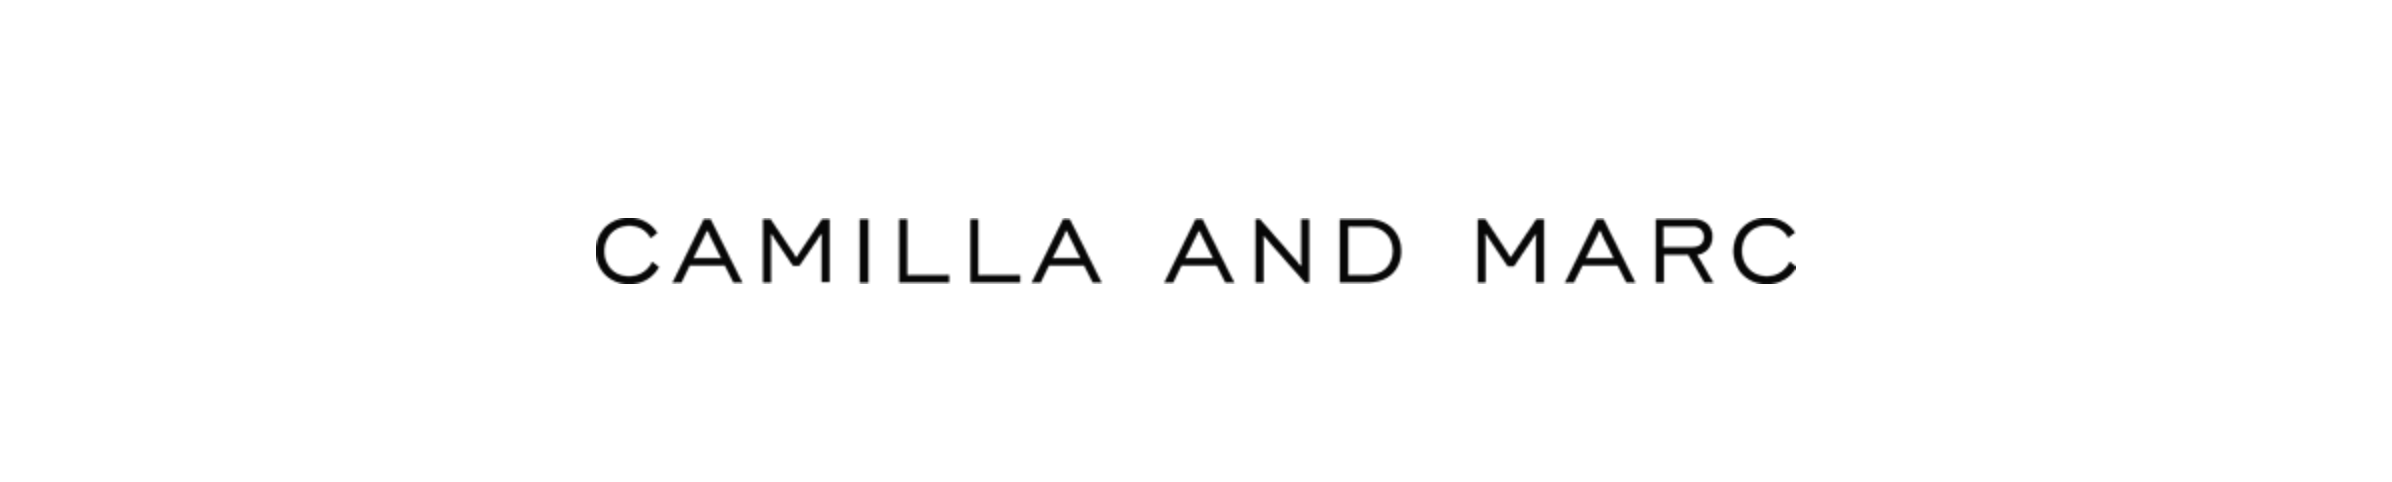 Camilla and Marc Logo